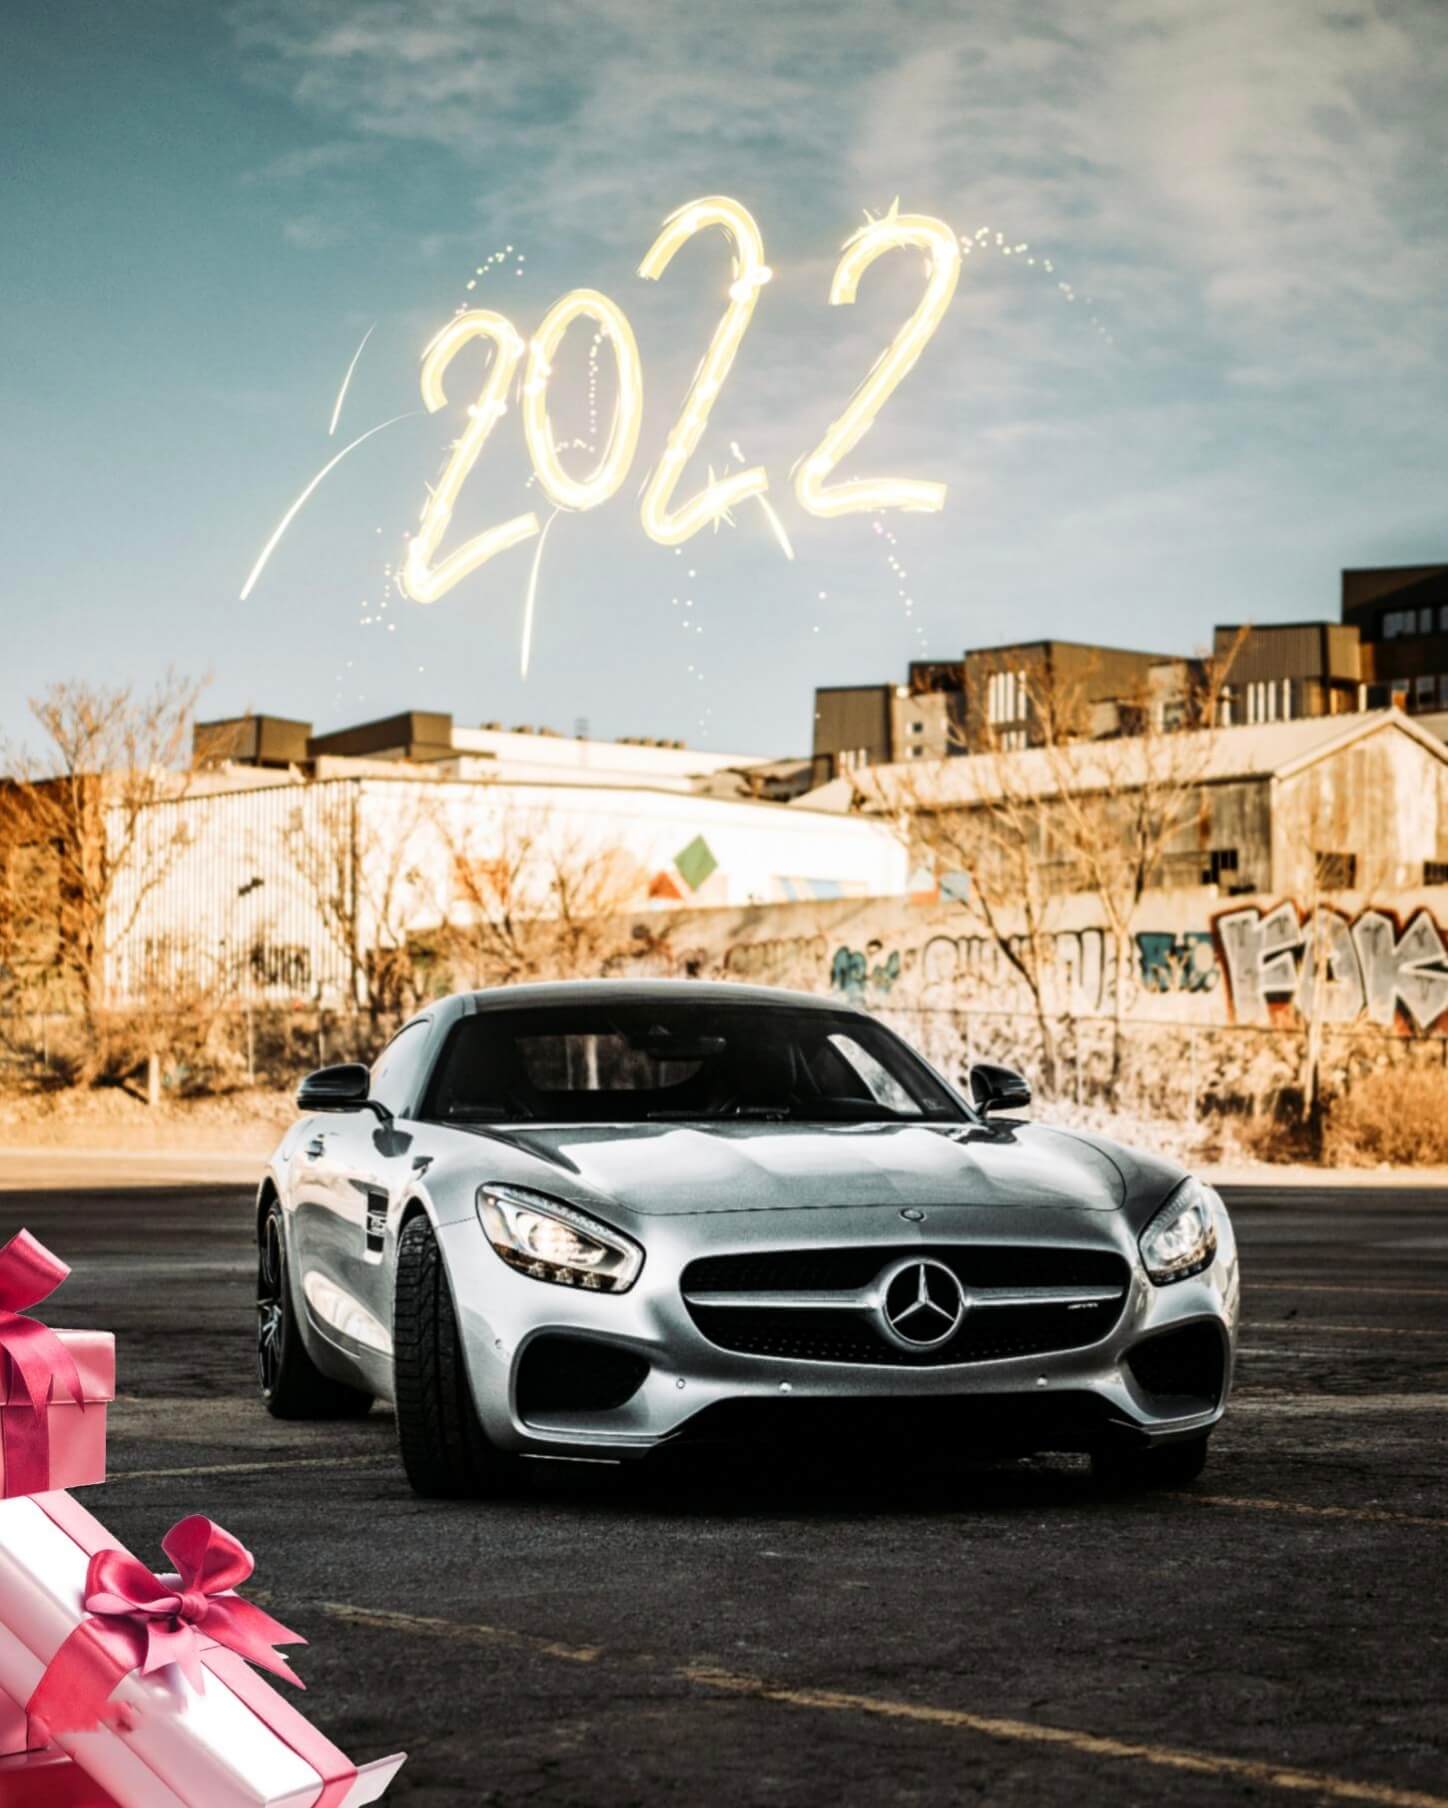 🔥 2022 Happy New Year Car On Road Picsart Background Cbeditz